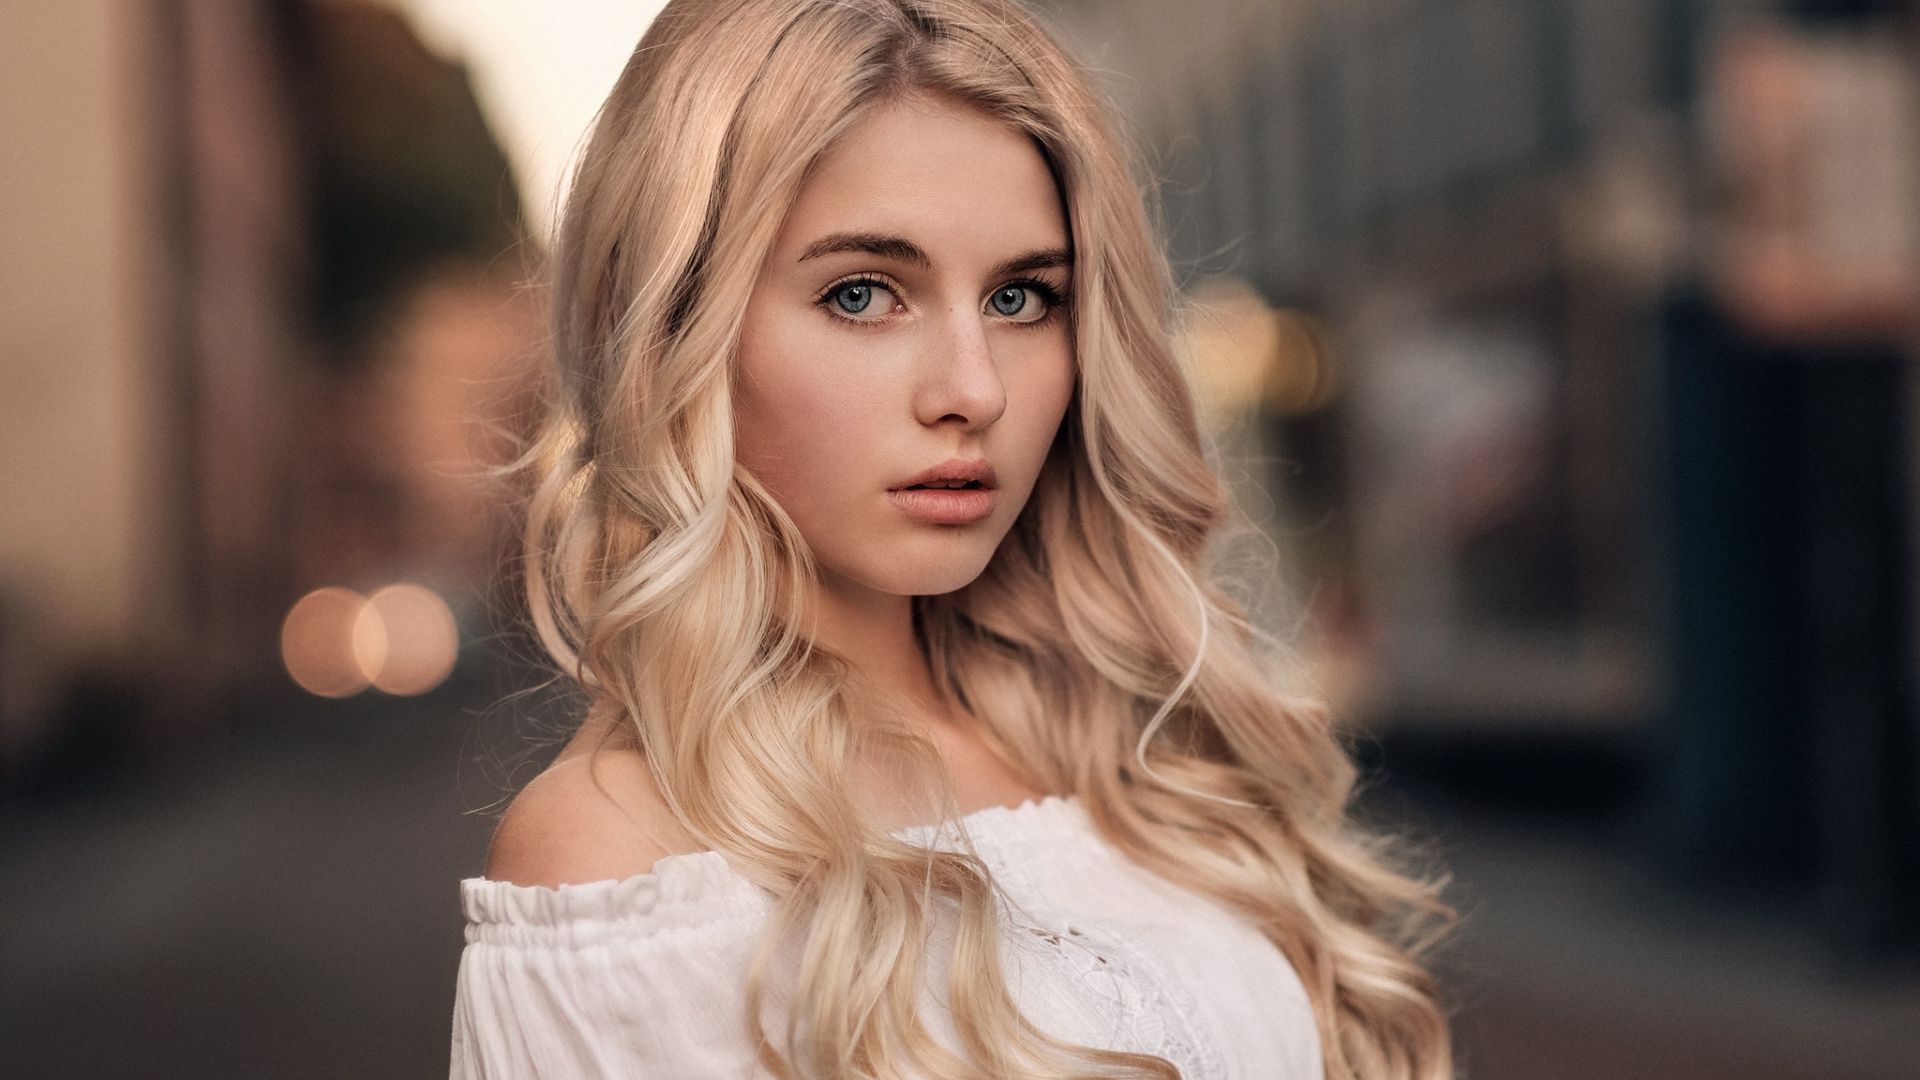 Wallpaper Blonde girl, street, outdoor, model